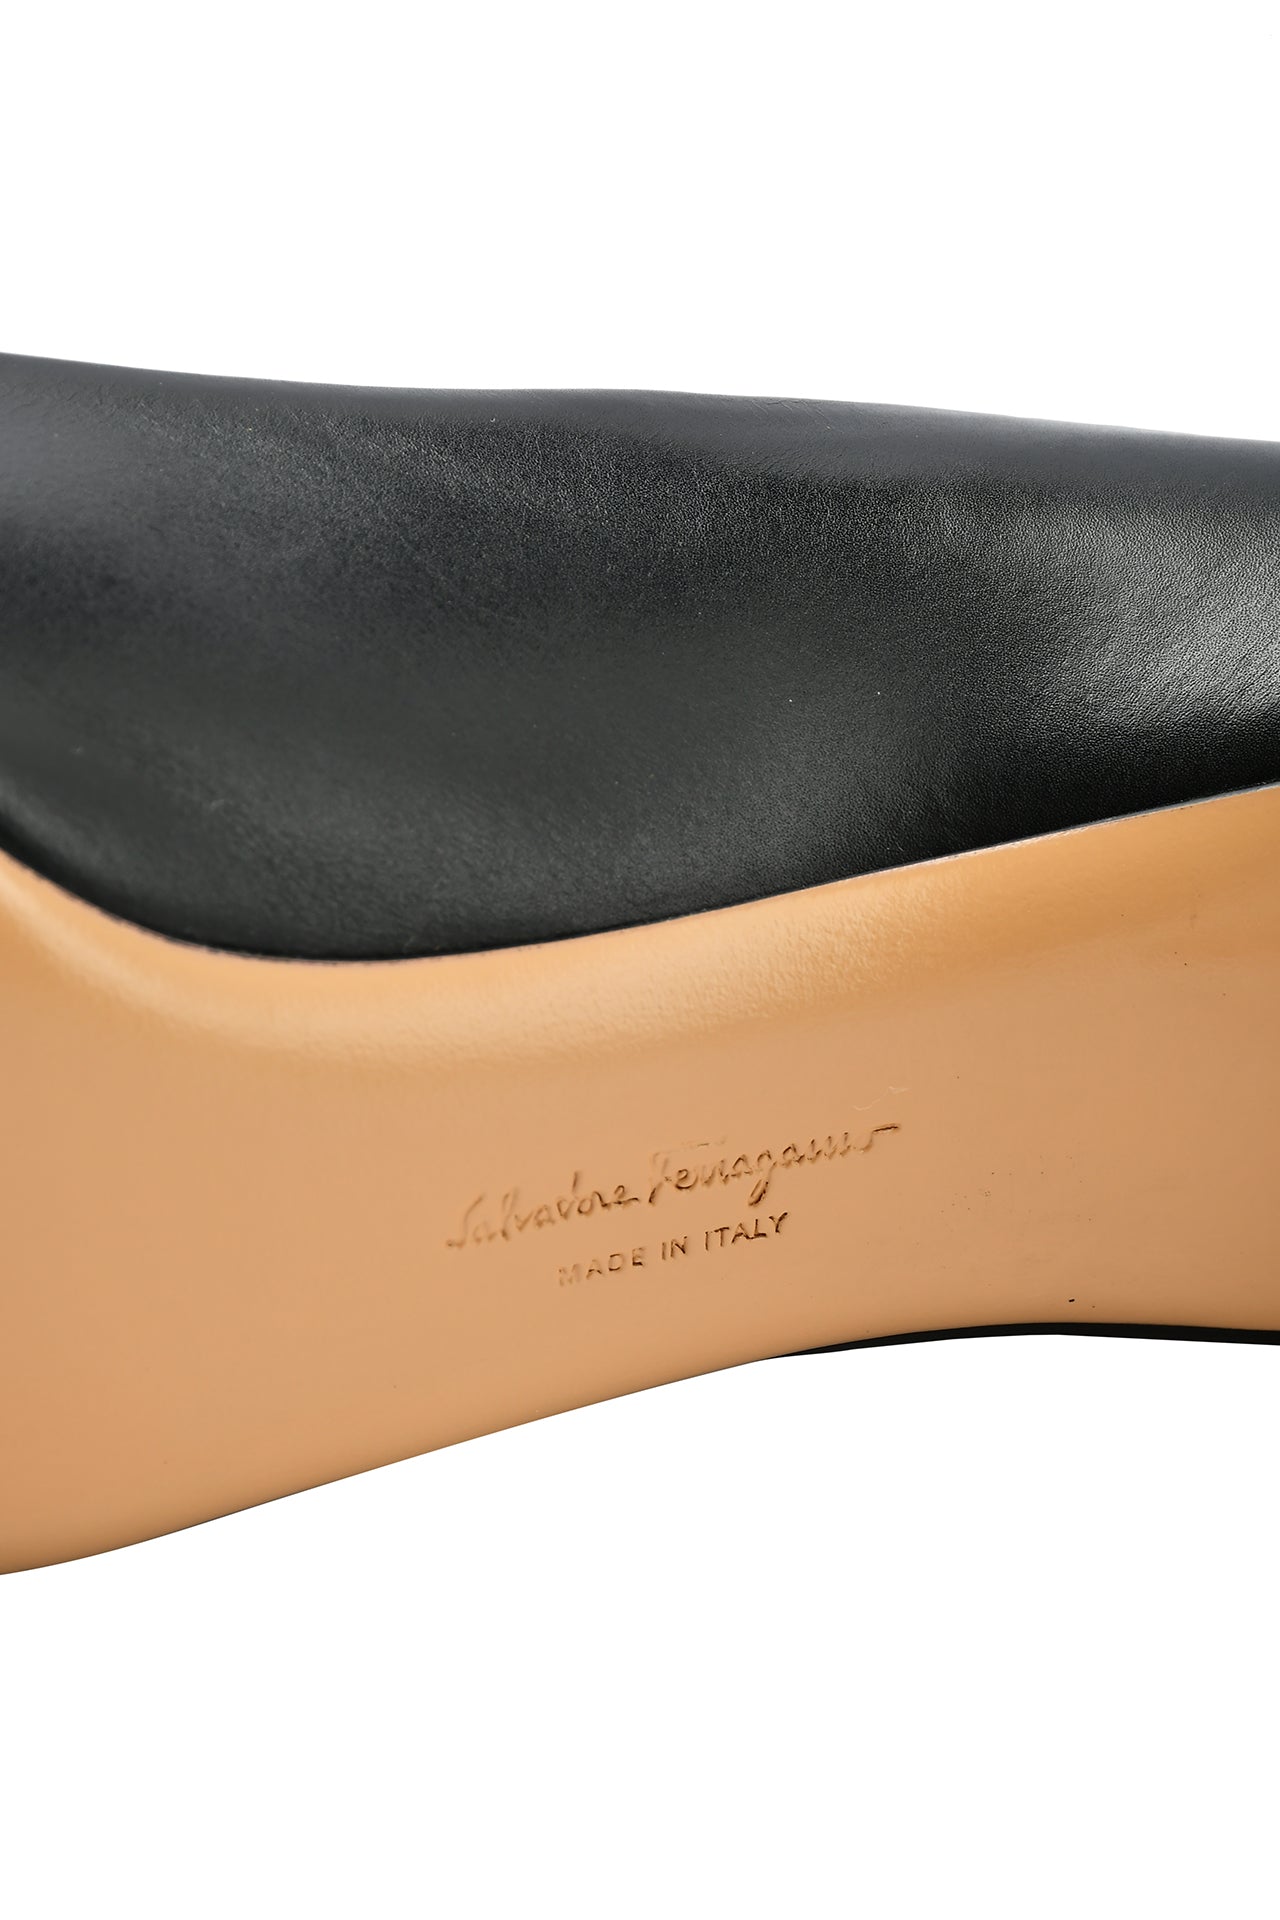 Salvatore Ferragamo Black Leather Pola Vara Bow Peep Toe Pumps EU 39.5